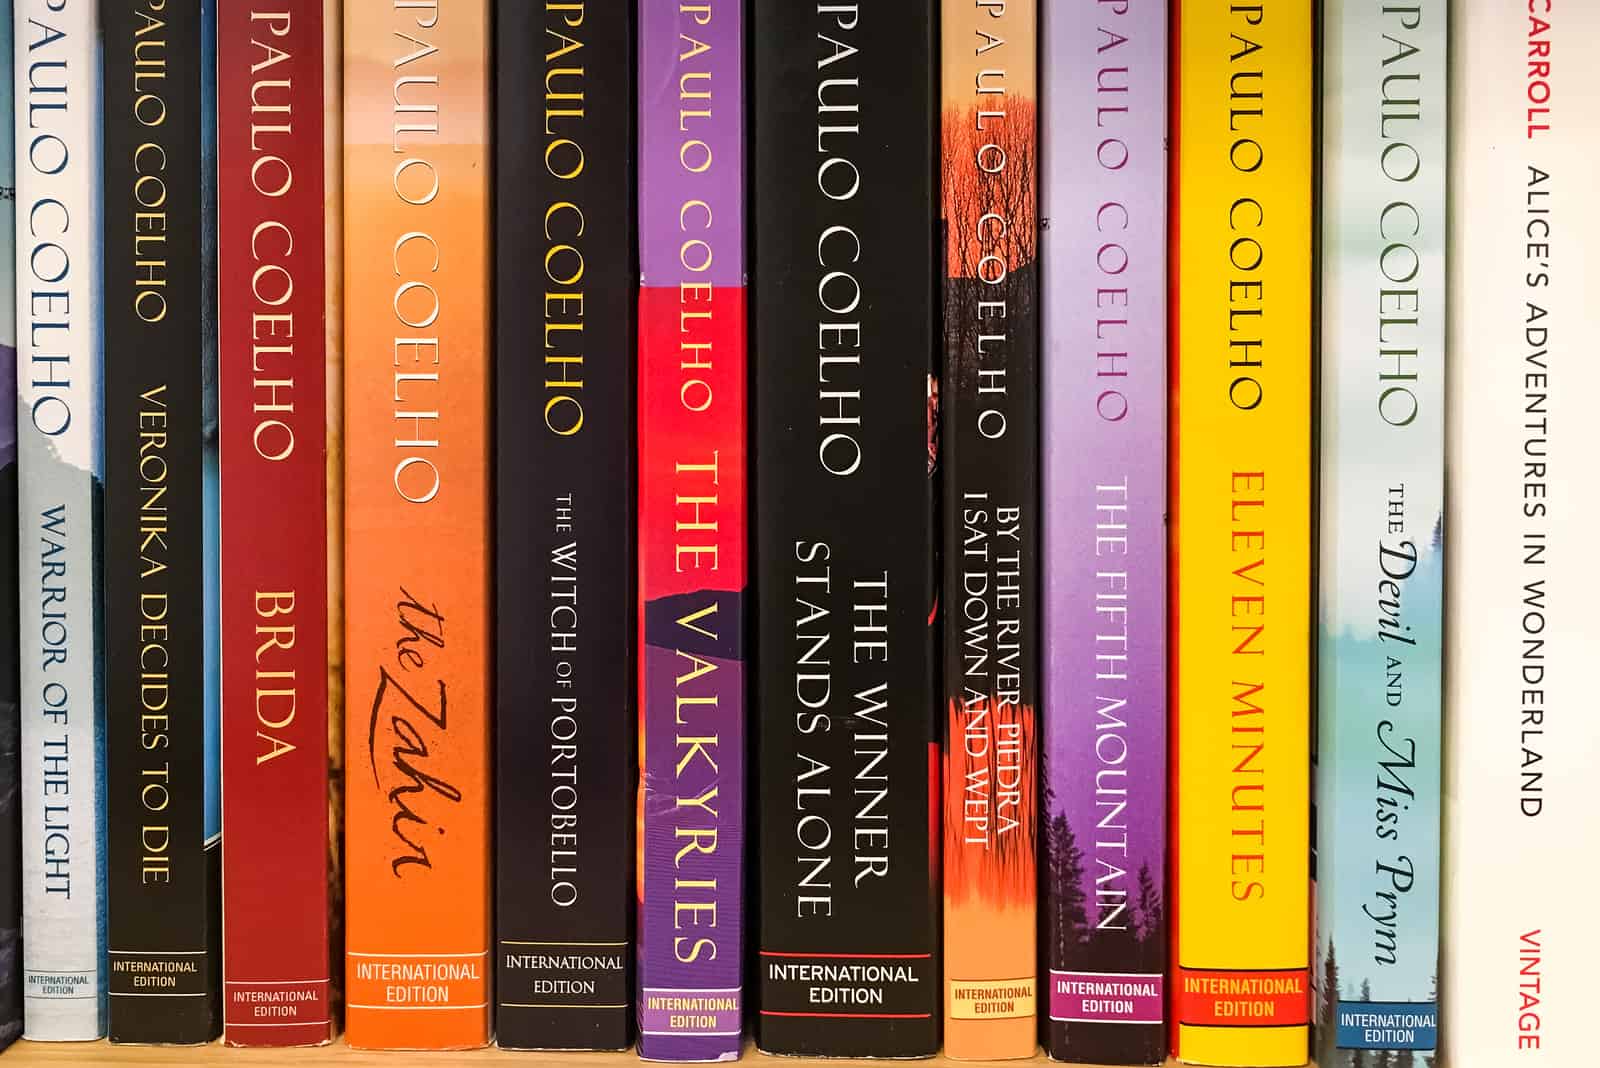 Bücher von Paulo Coelho